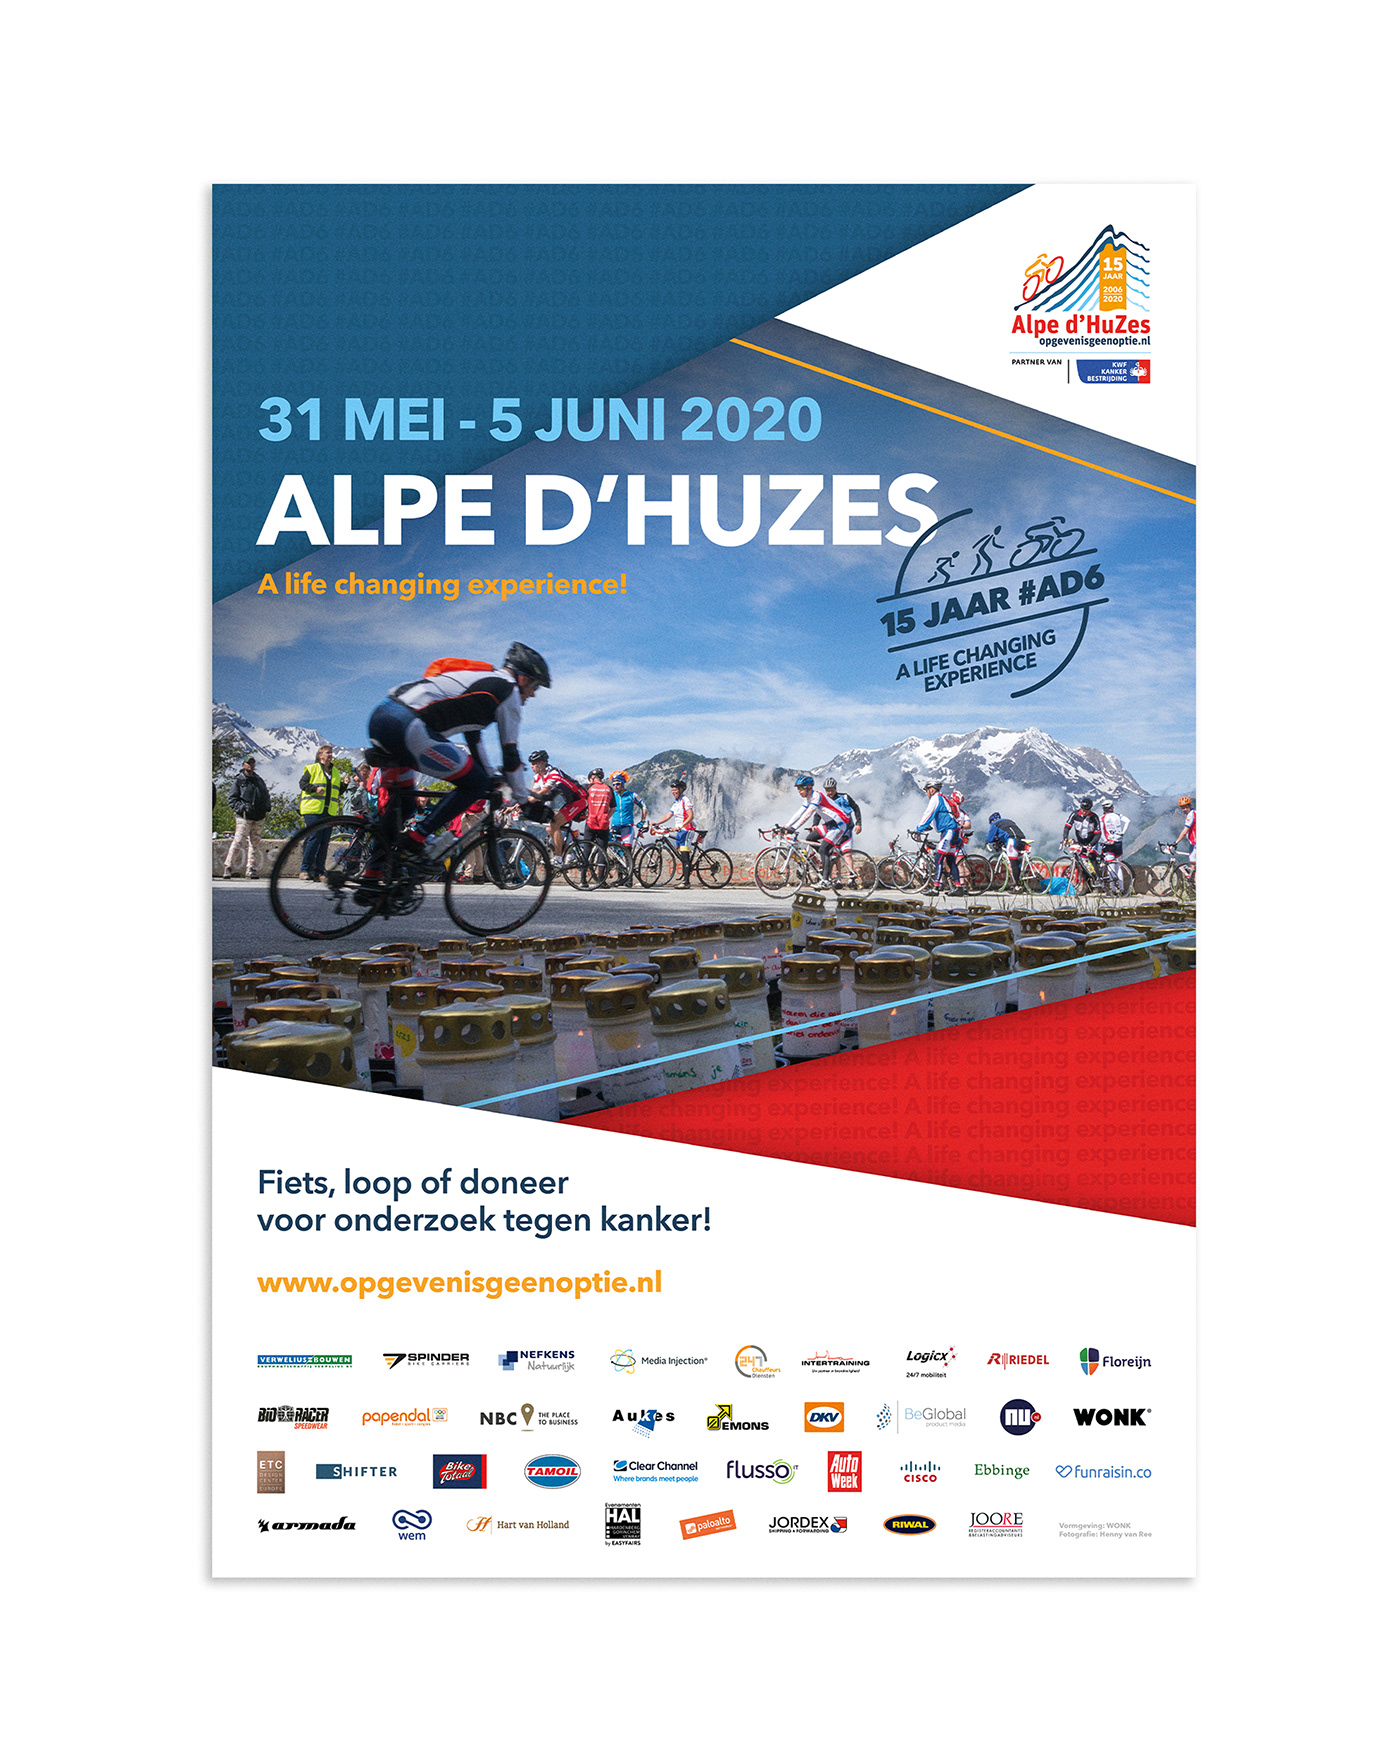 ad6 alped'huzes charity Cycling frankrijk mountains walking Webdesign Wielrennen